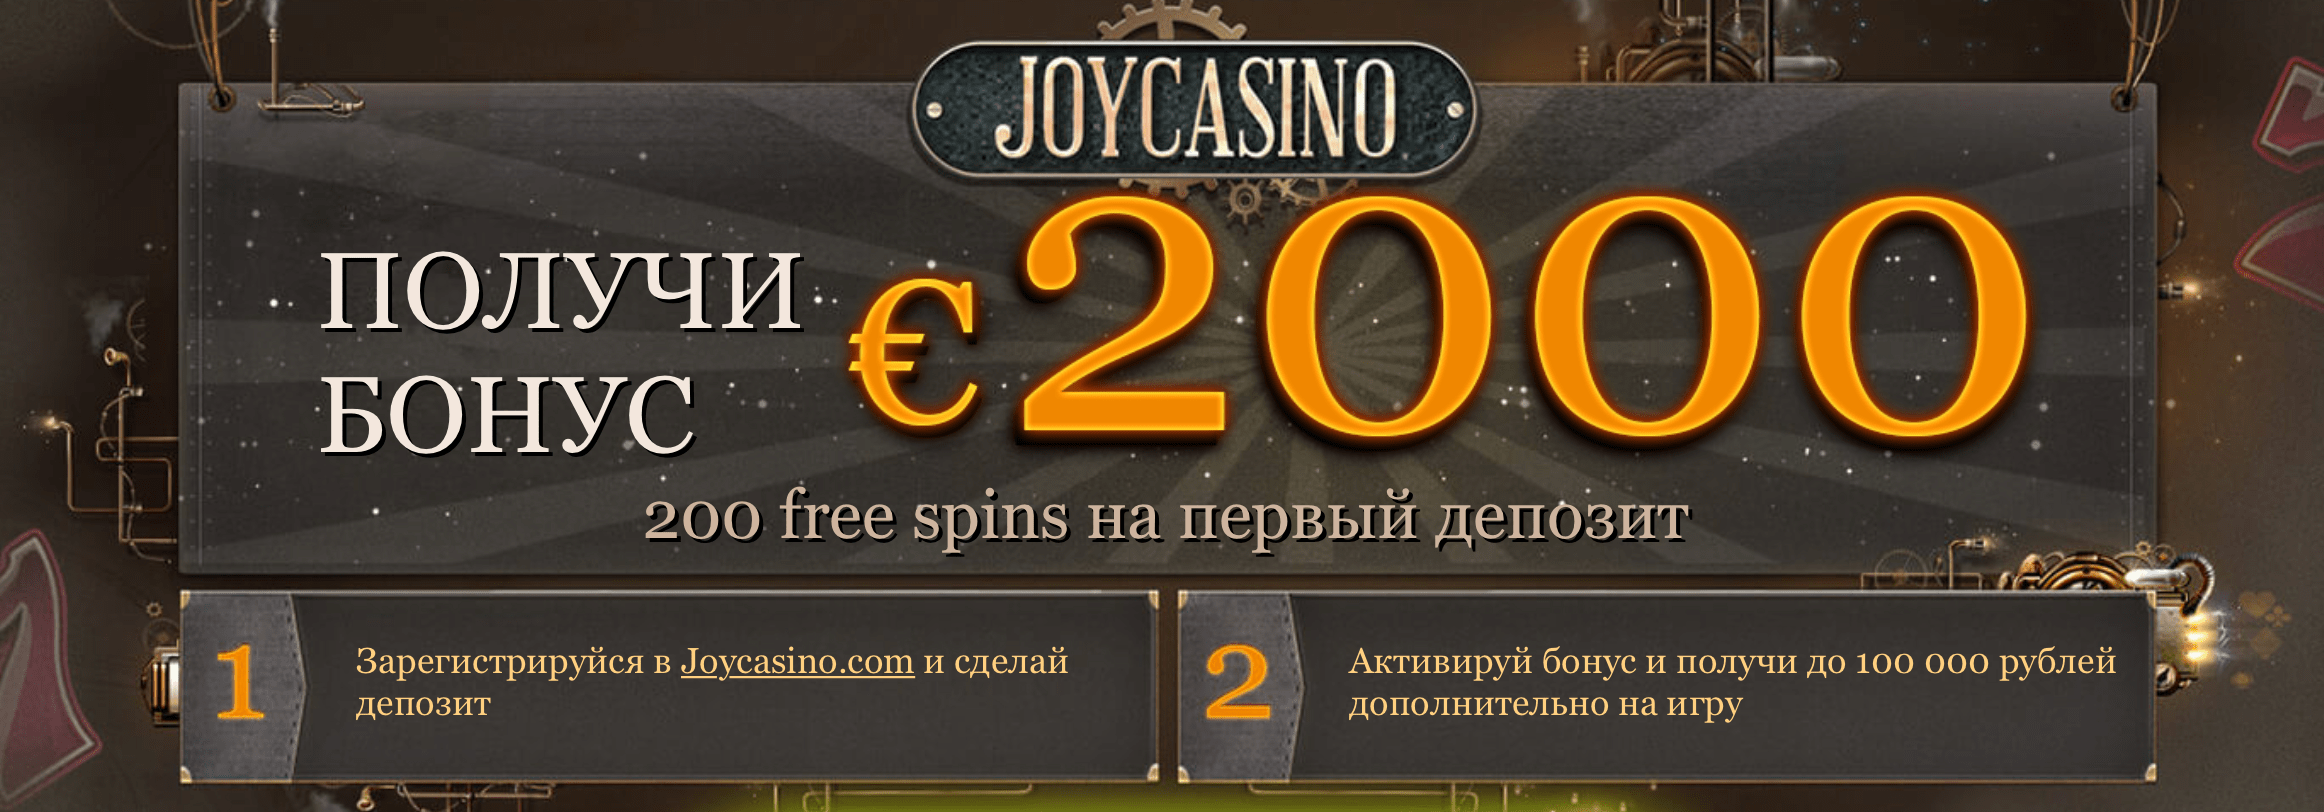 Joycasino – онлайн казино